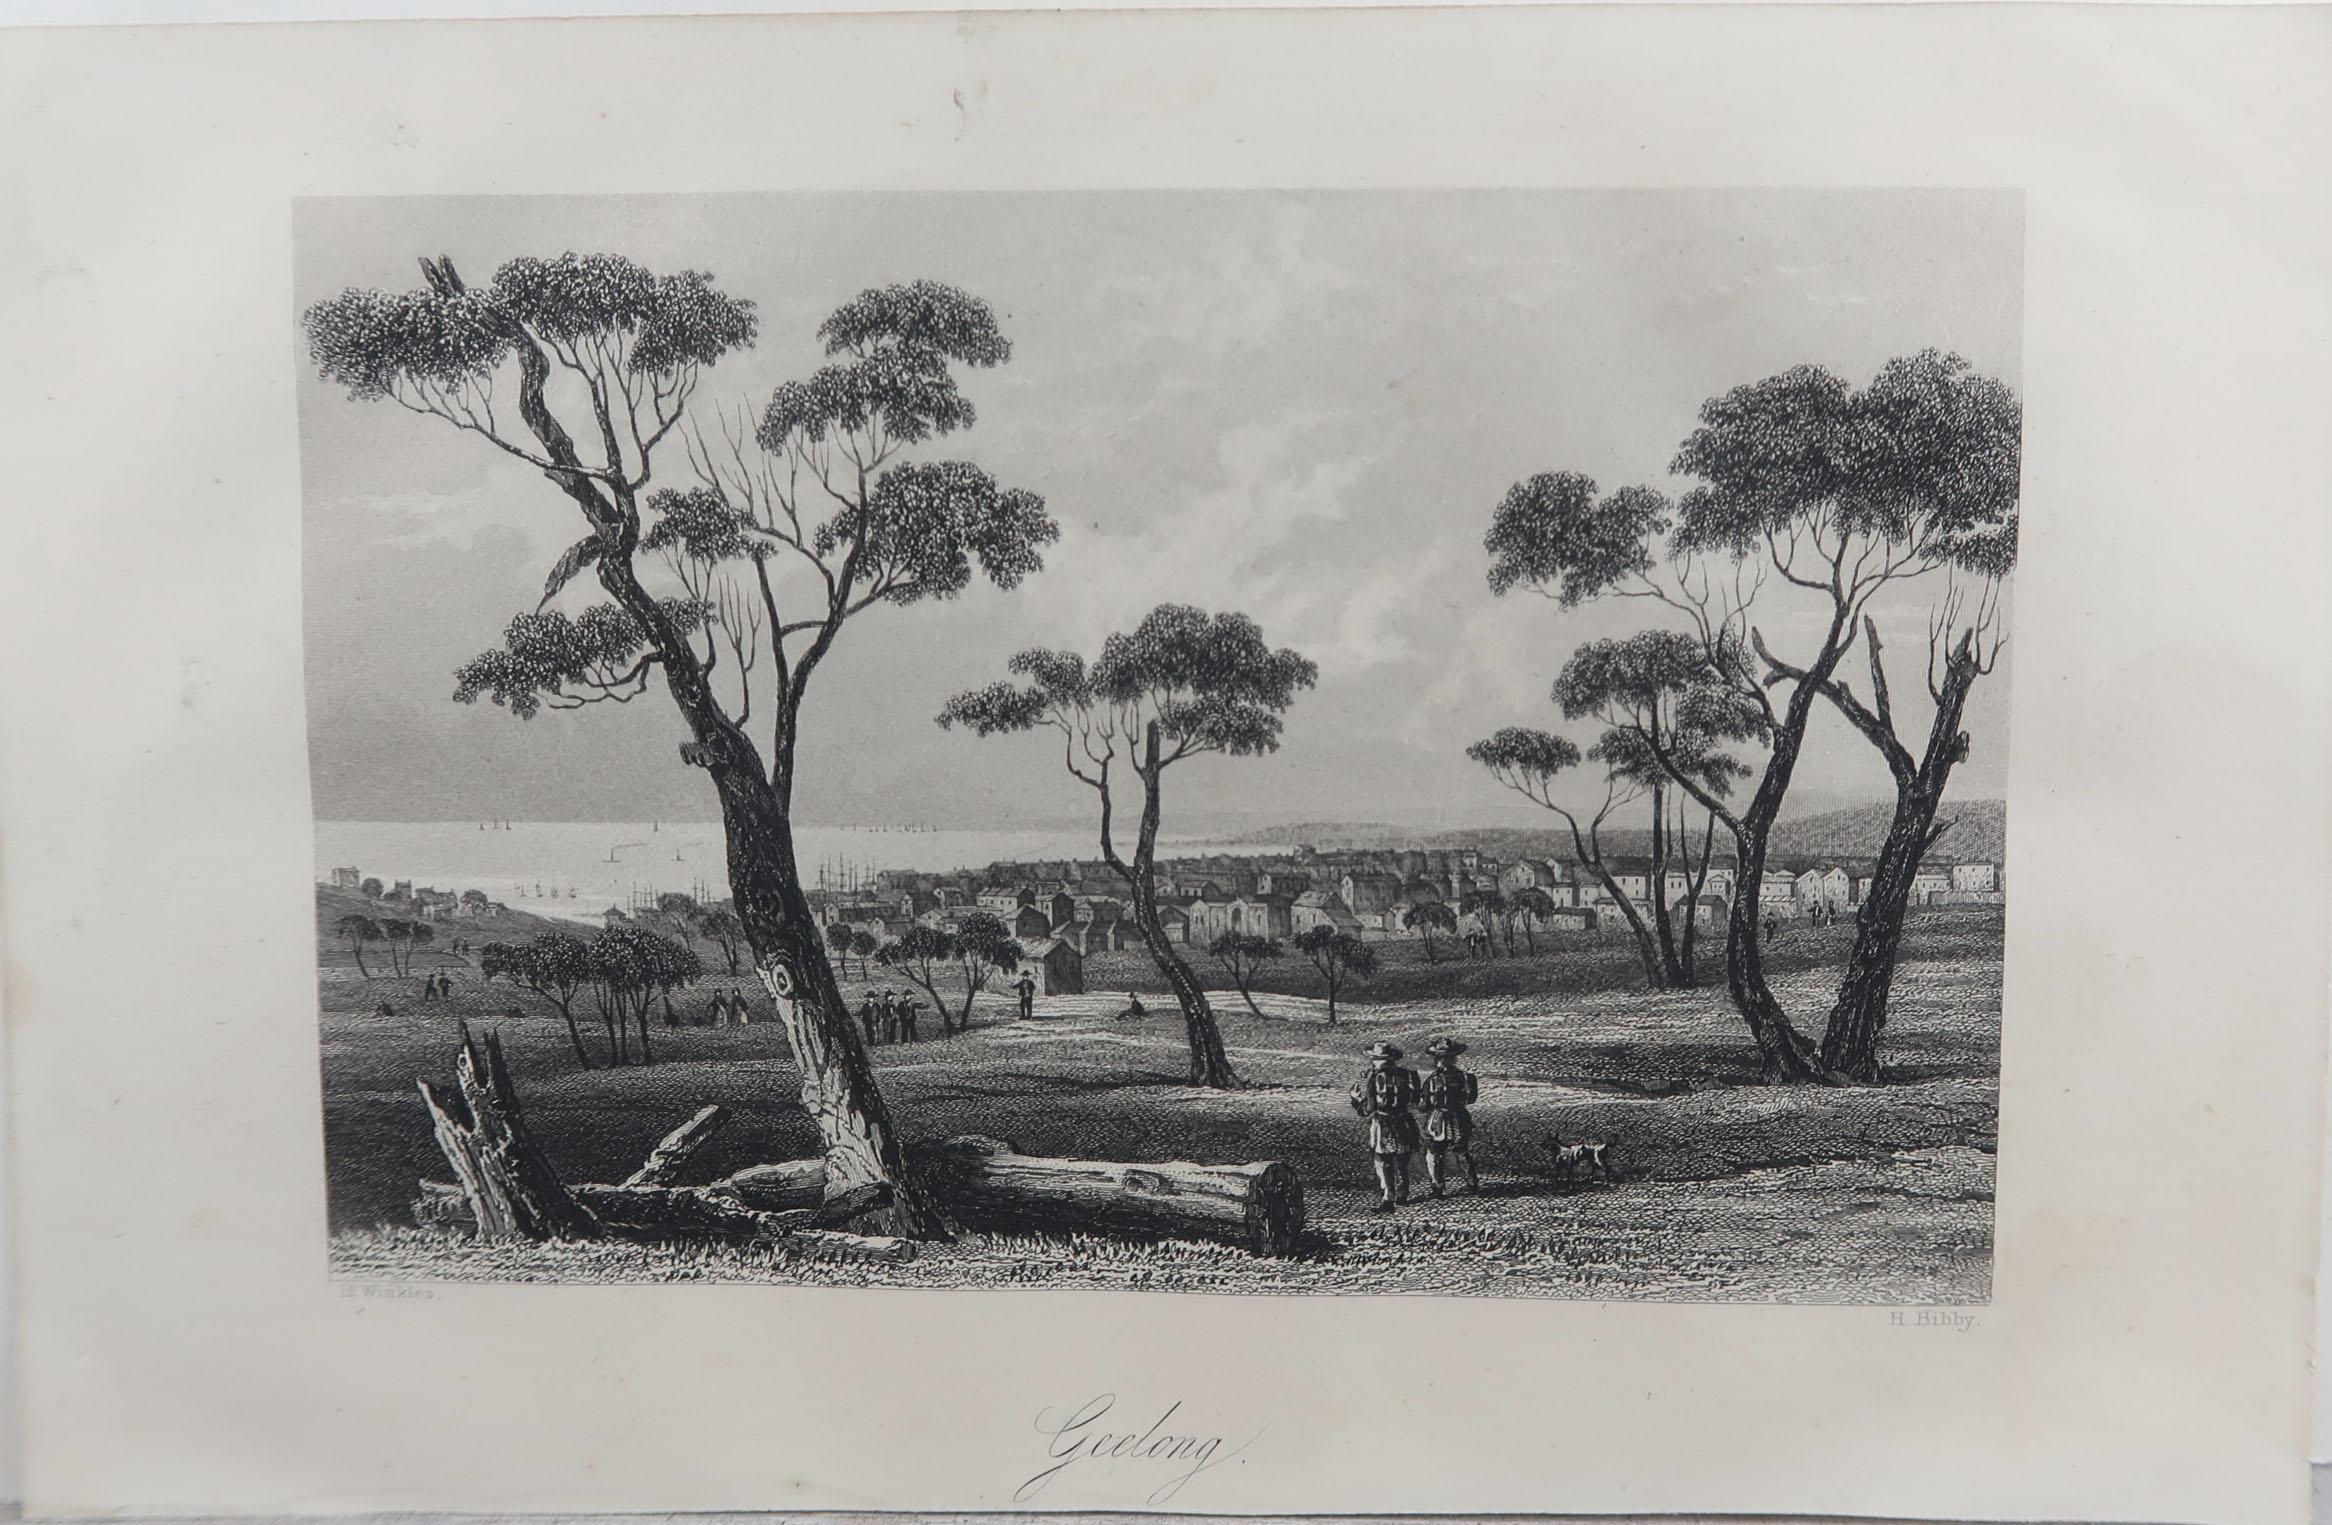 Other Original Antique Print of Geelong, Australia, circa 1850